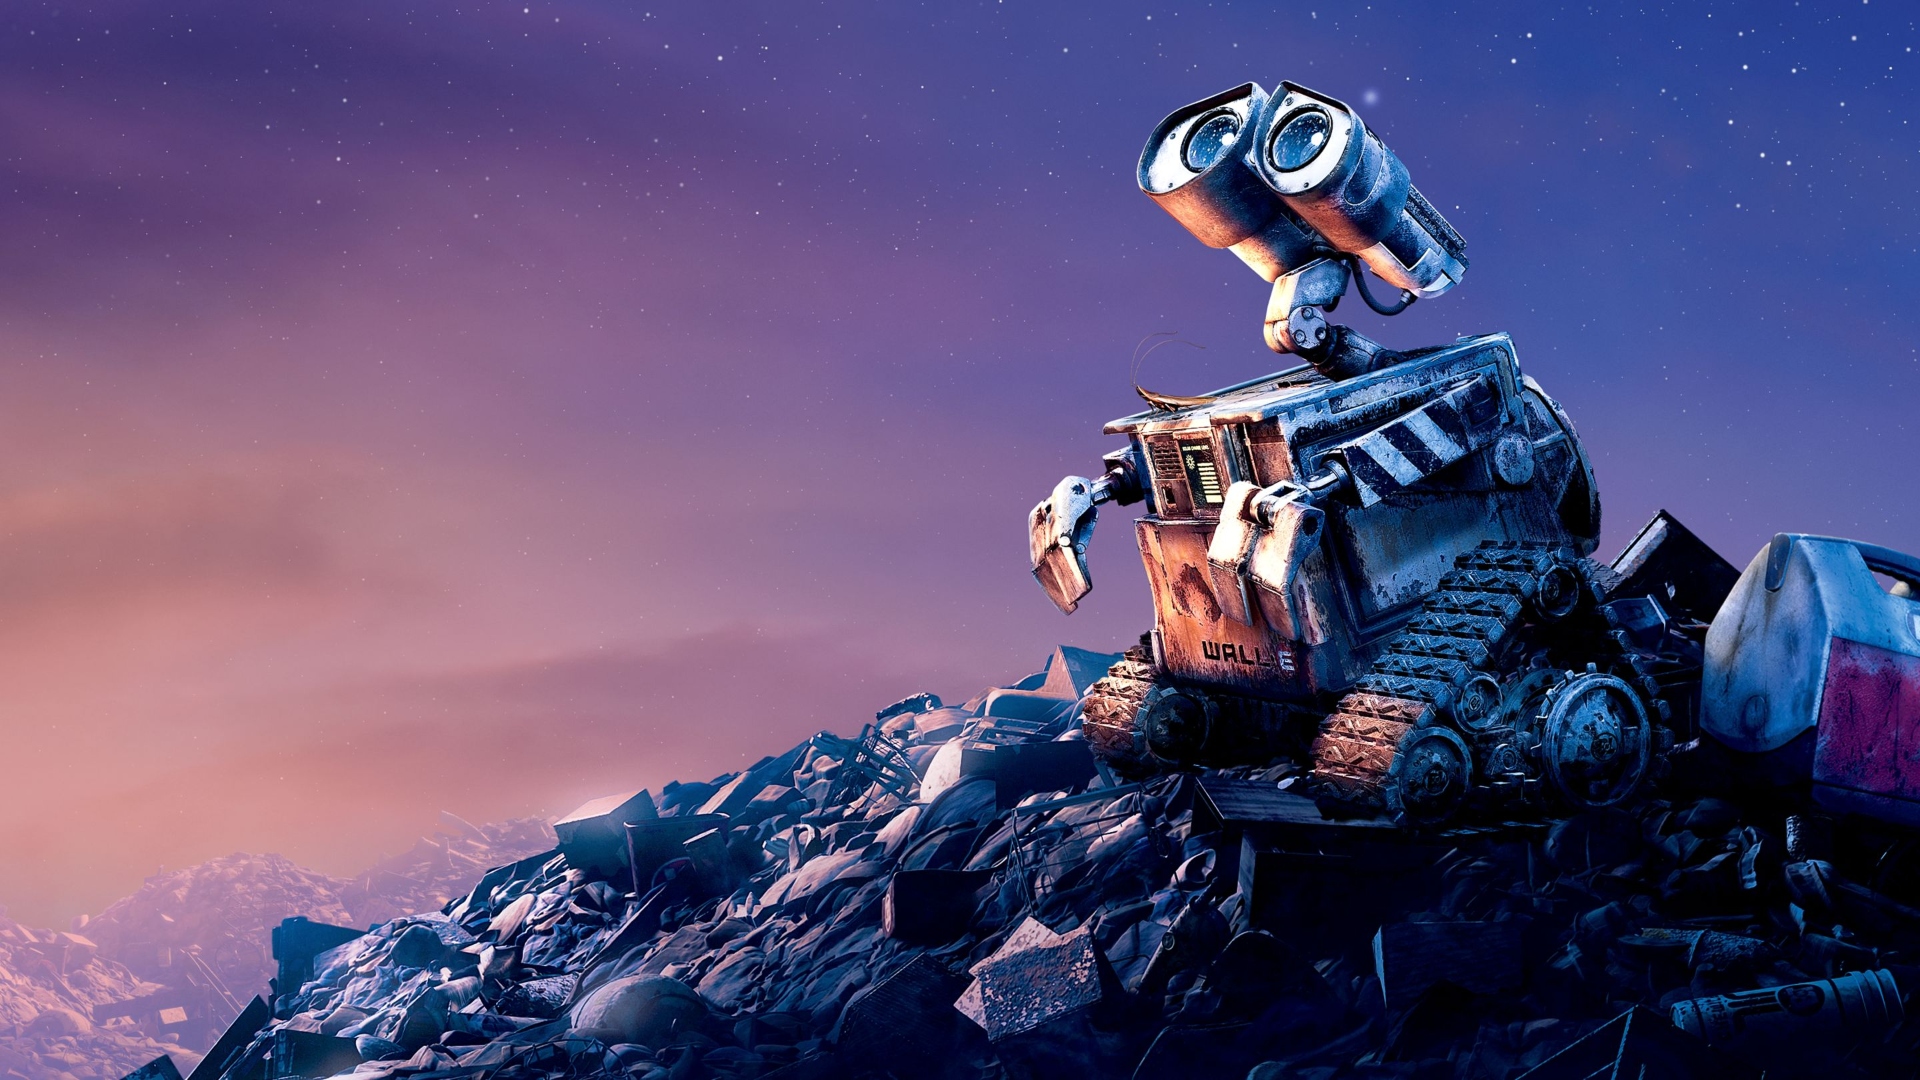 WALL E Backgrounds